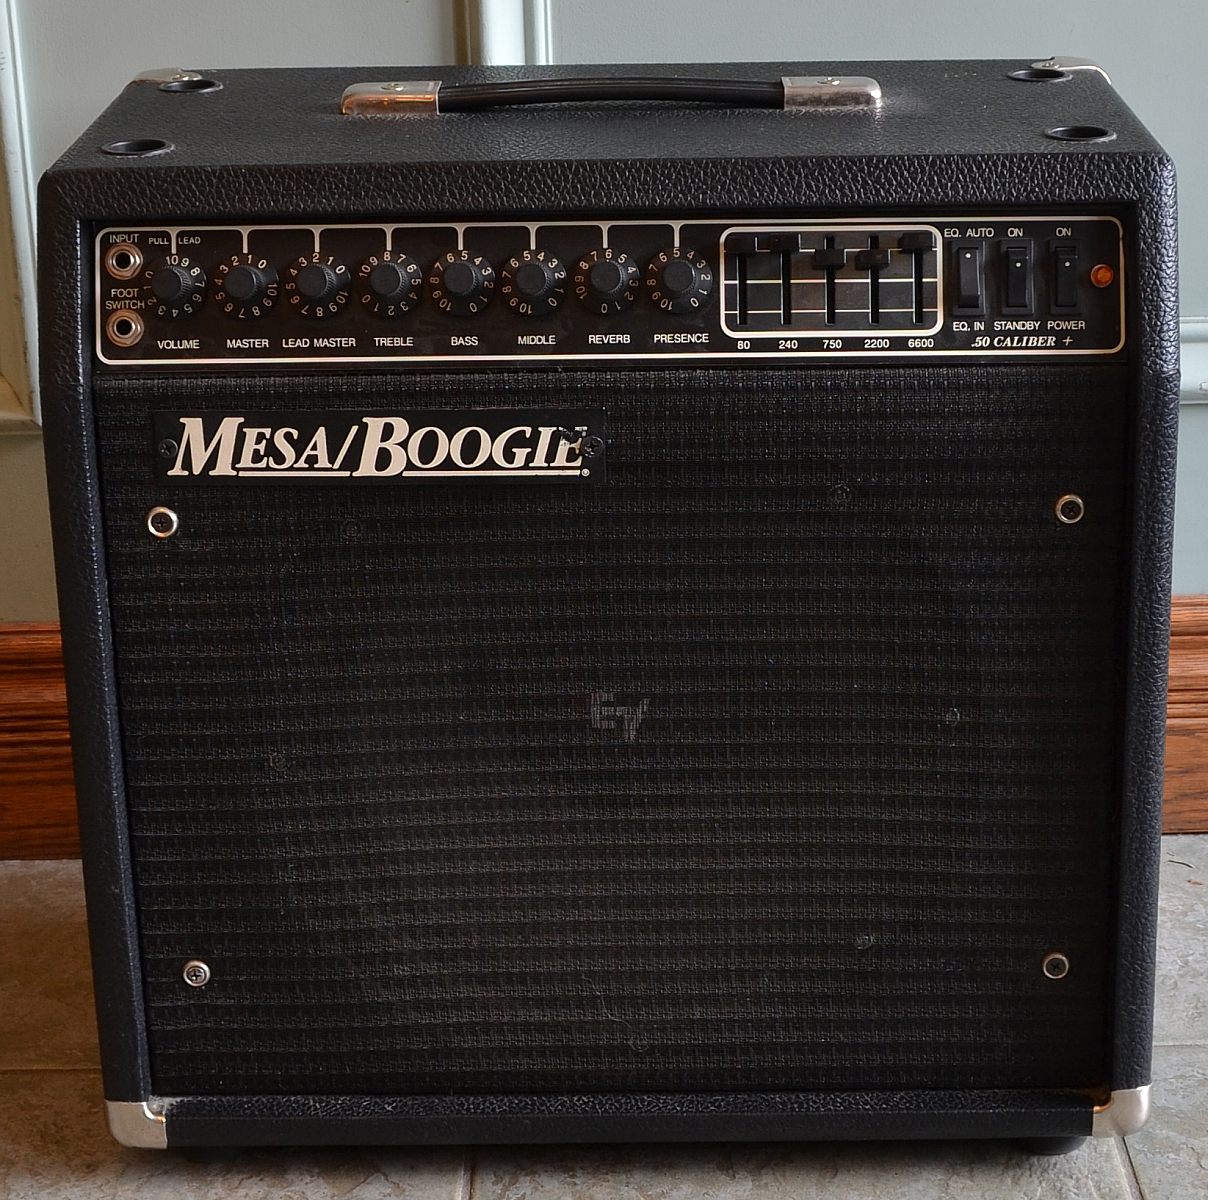 Mesa Boogie .50 Caliber Combo | www.12fret.com